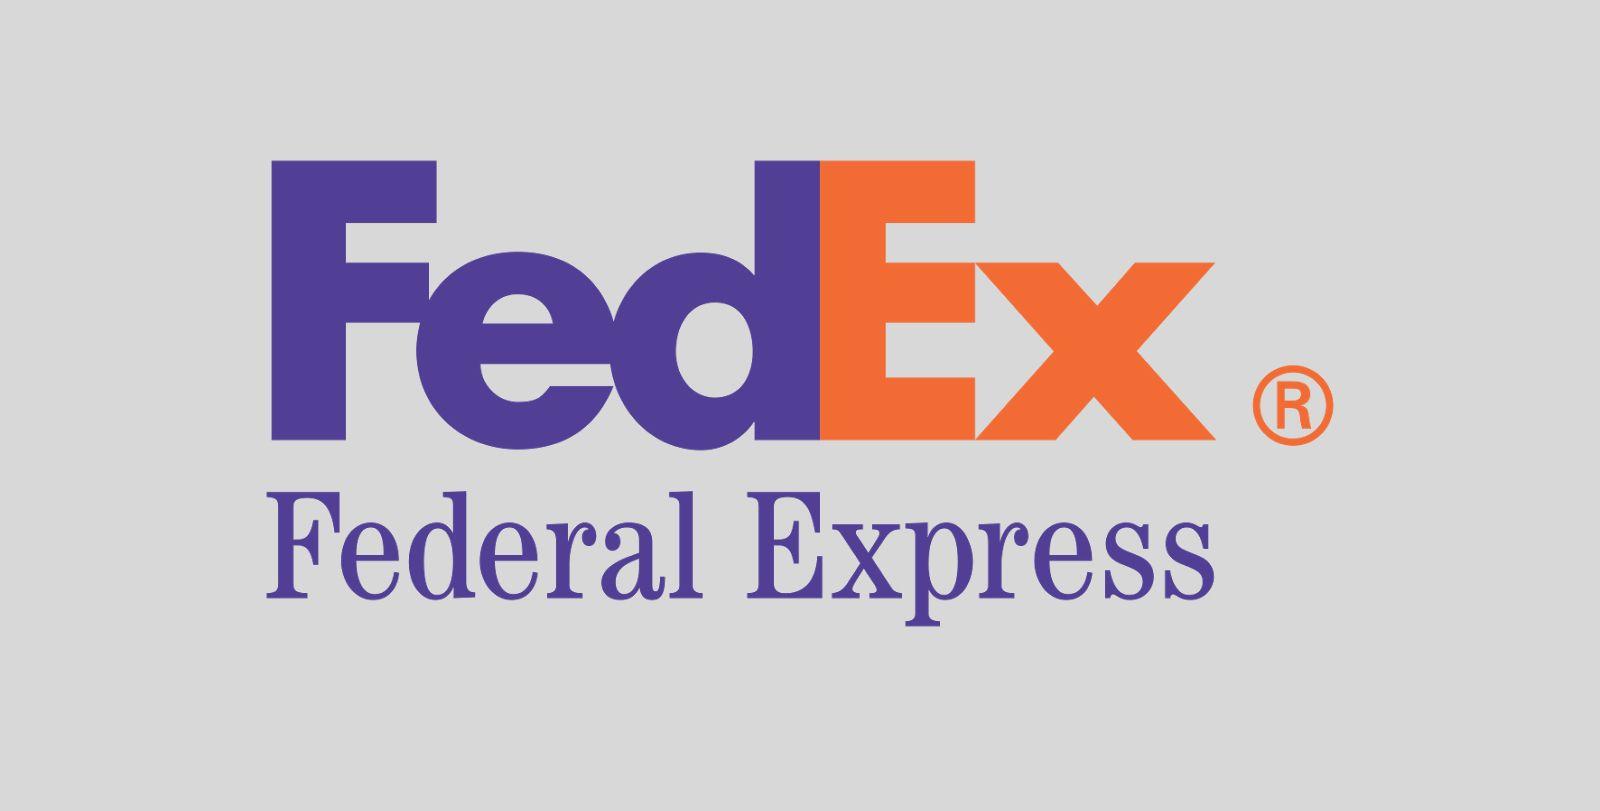 Who Designed the FedEx Logo - FedEx Logo, FedEx Symbol, Meaning, History and Evolution